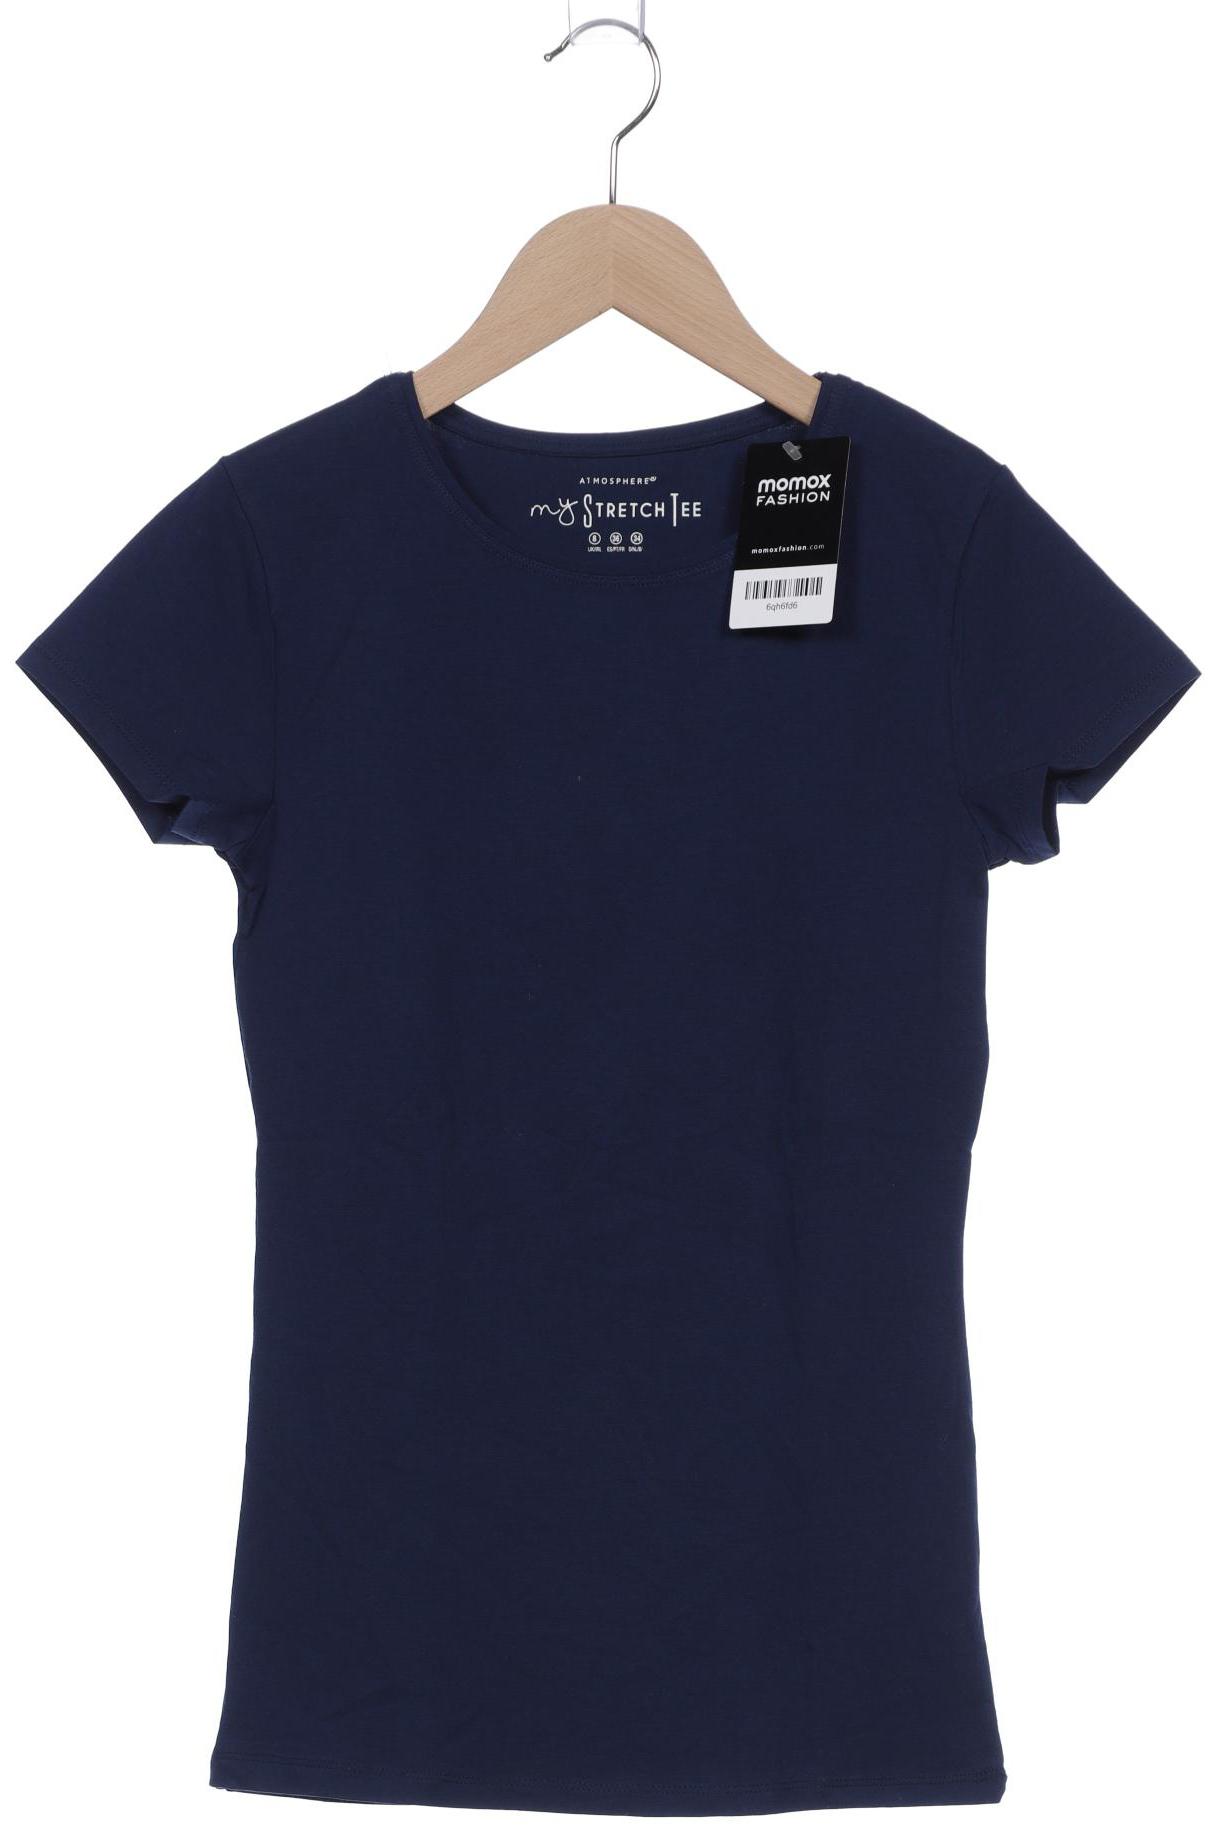 AÉROPOSTALE Damen T-Shirt, marineblau von AÉROPOSTALE